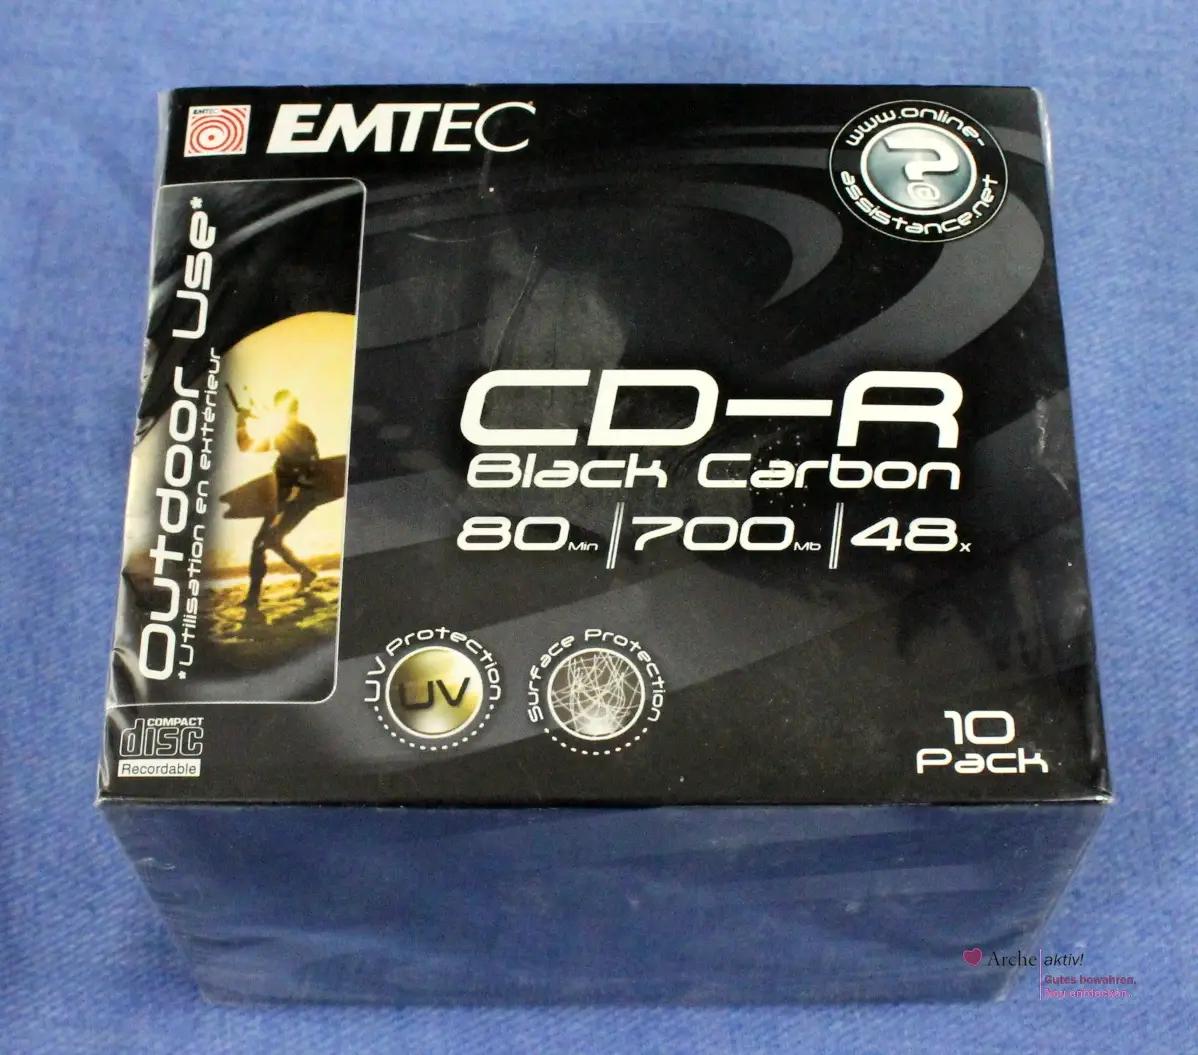 EMTEC BASF CD-R Black Carbon, 10 Stück, Neu in OVP